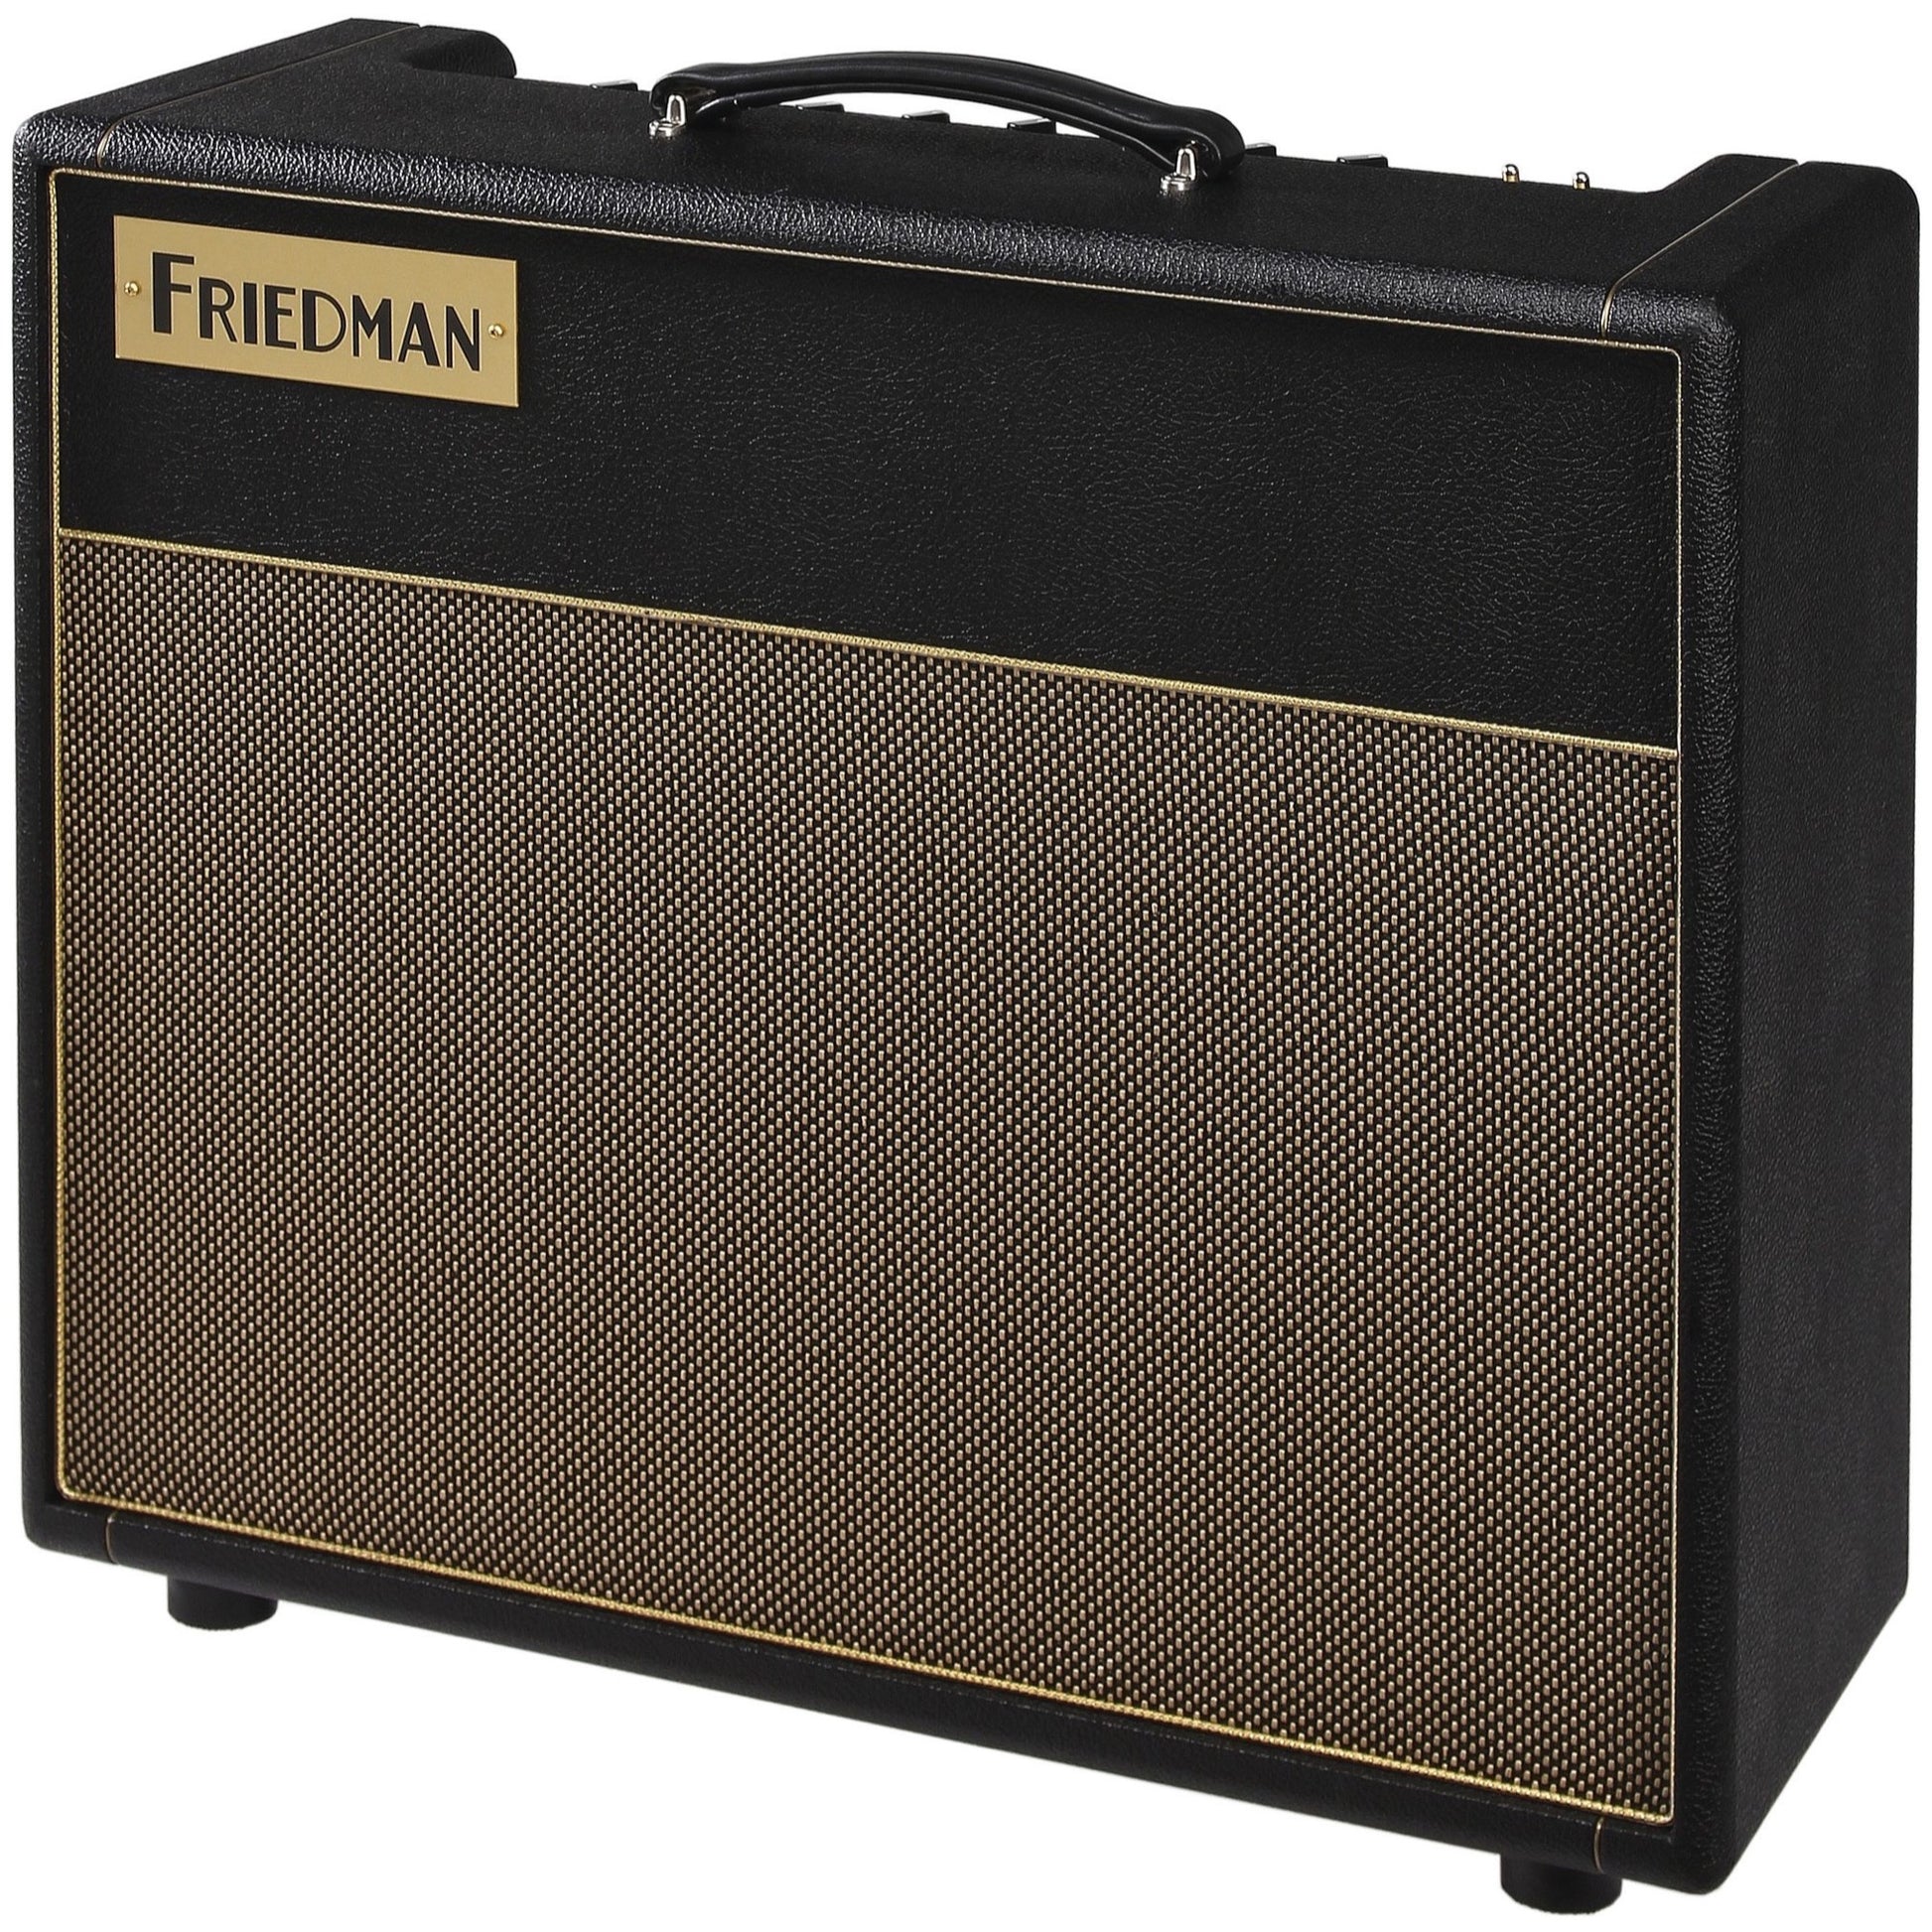 Friedman Small Box 50 Guitar Combo Amplifier (50 Watts, 1x12 Inch)